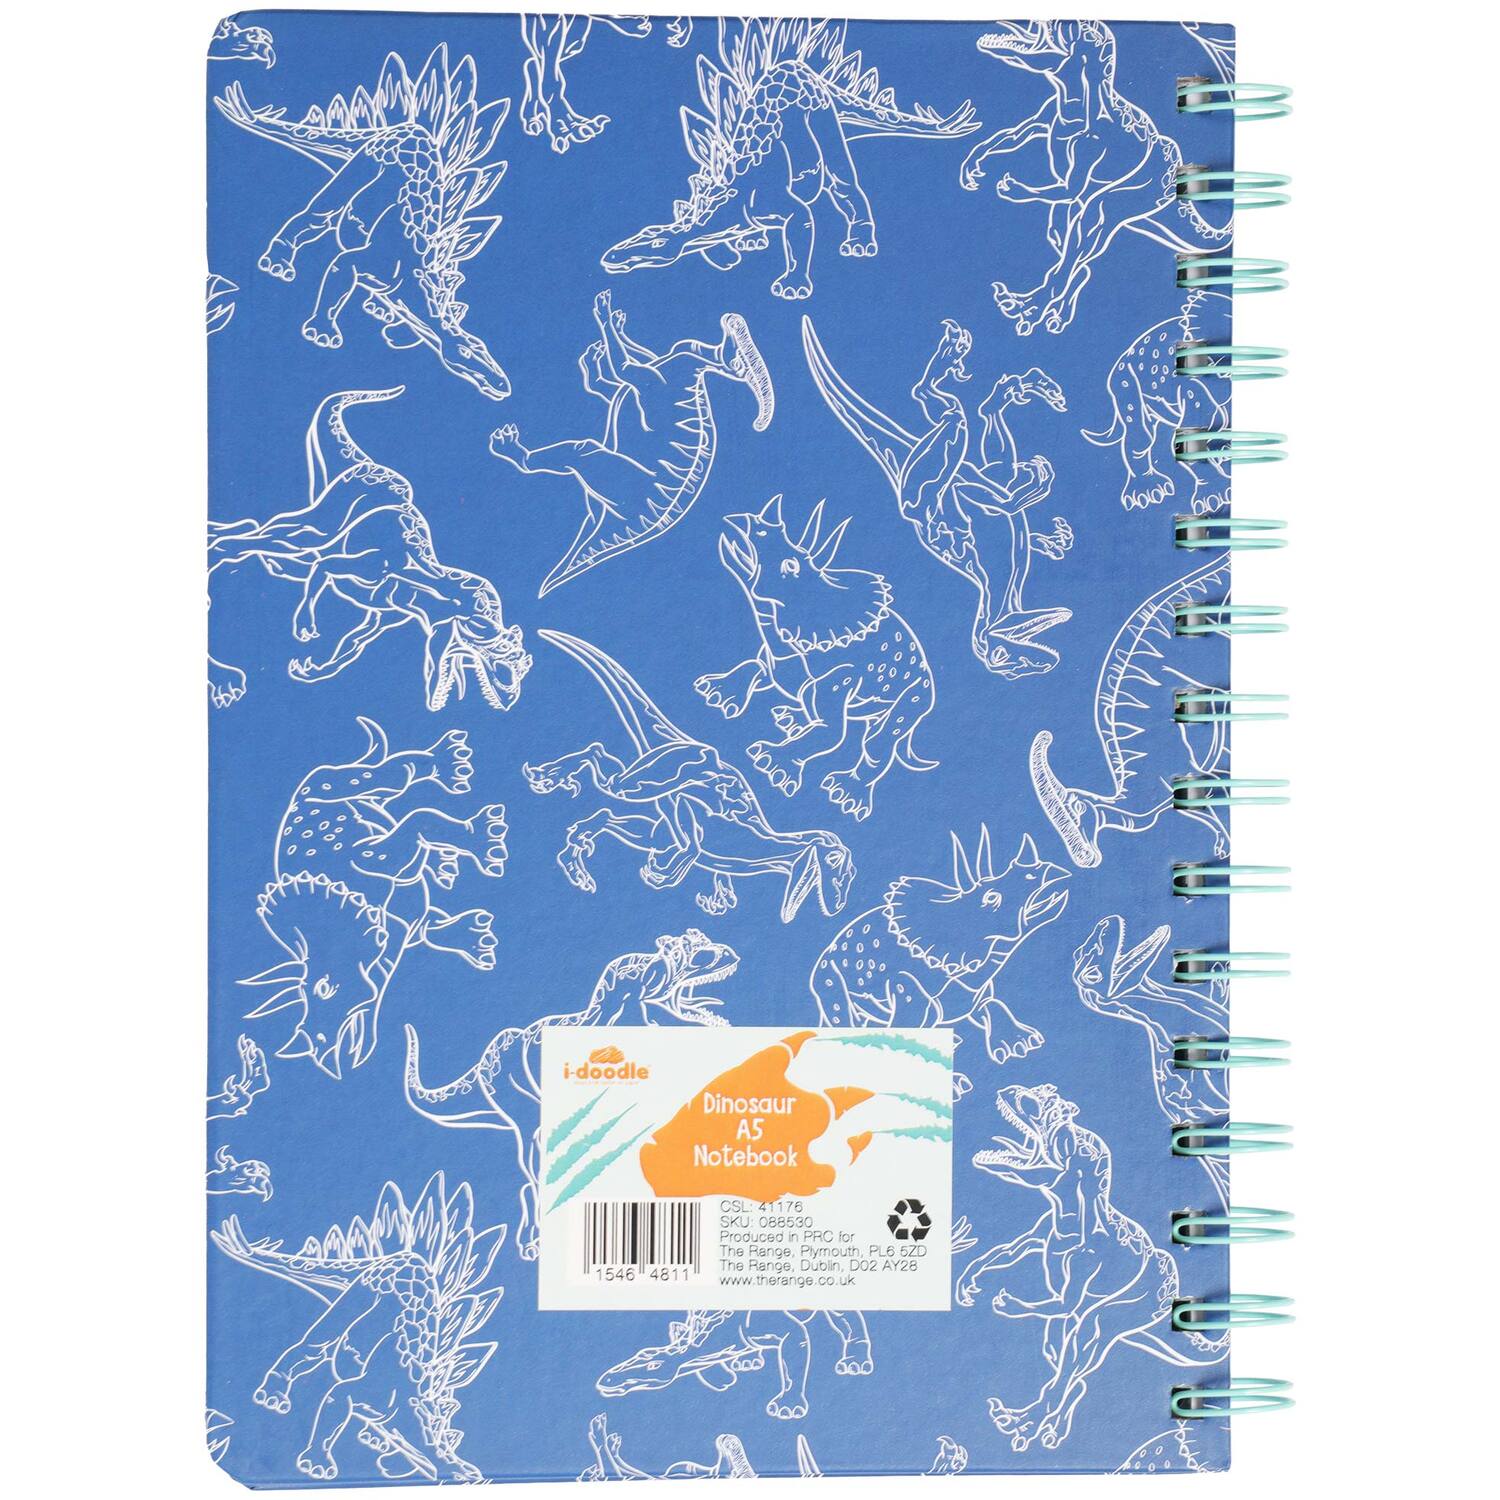 Dinosaur A5 Notebook - Blue Image 2